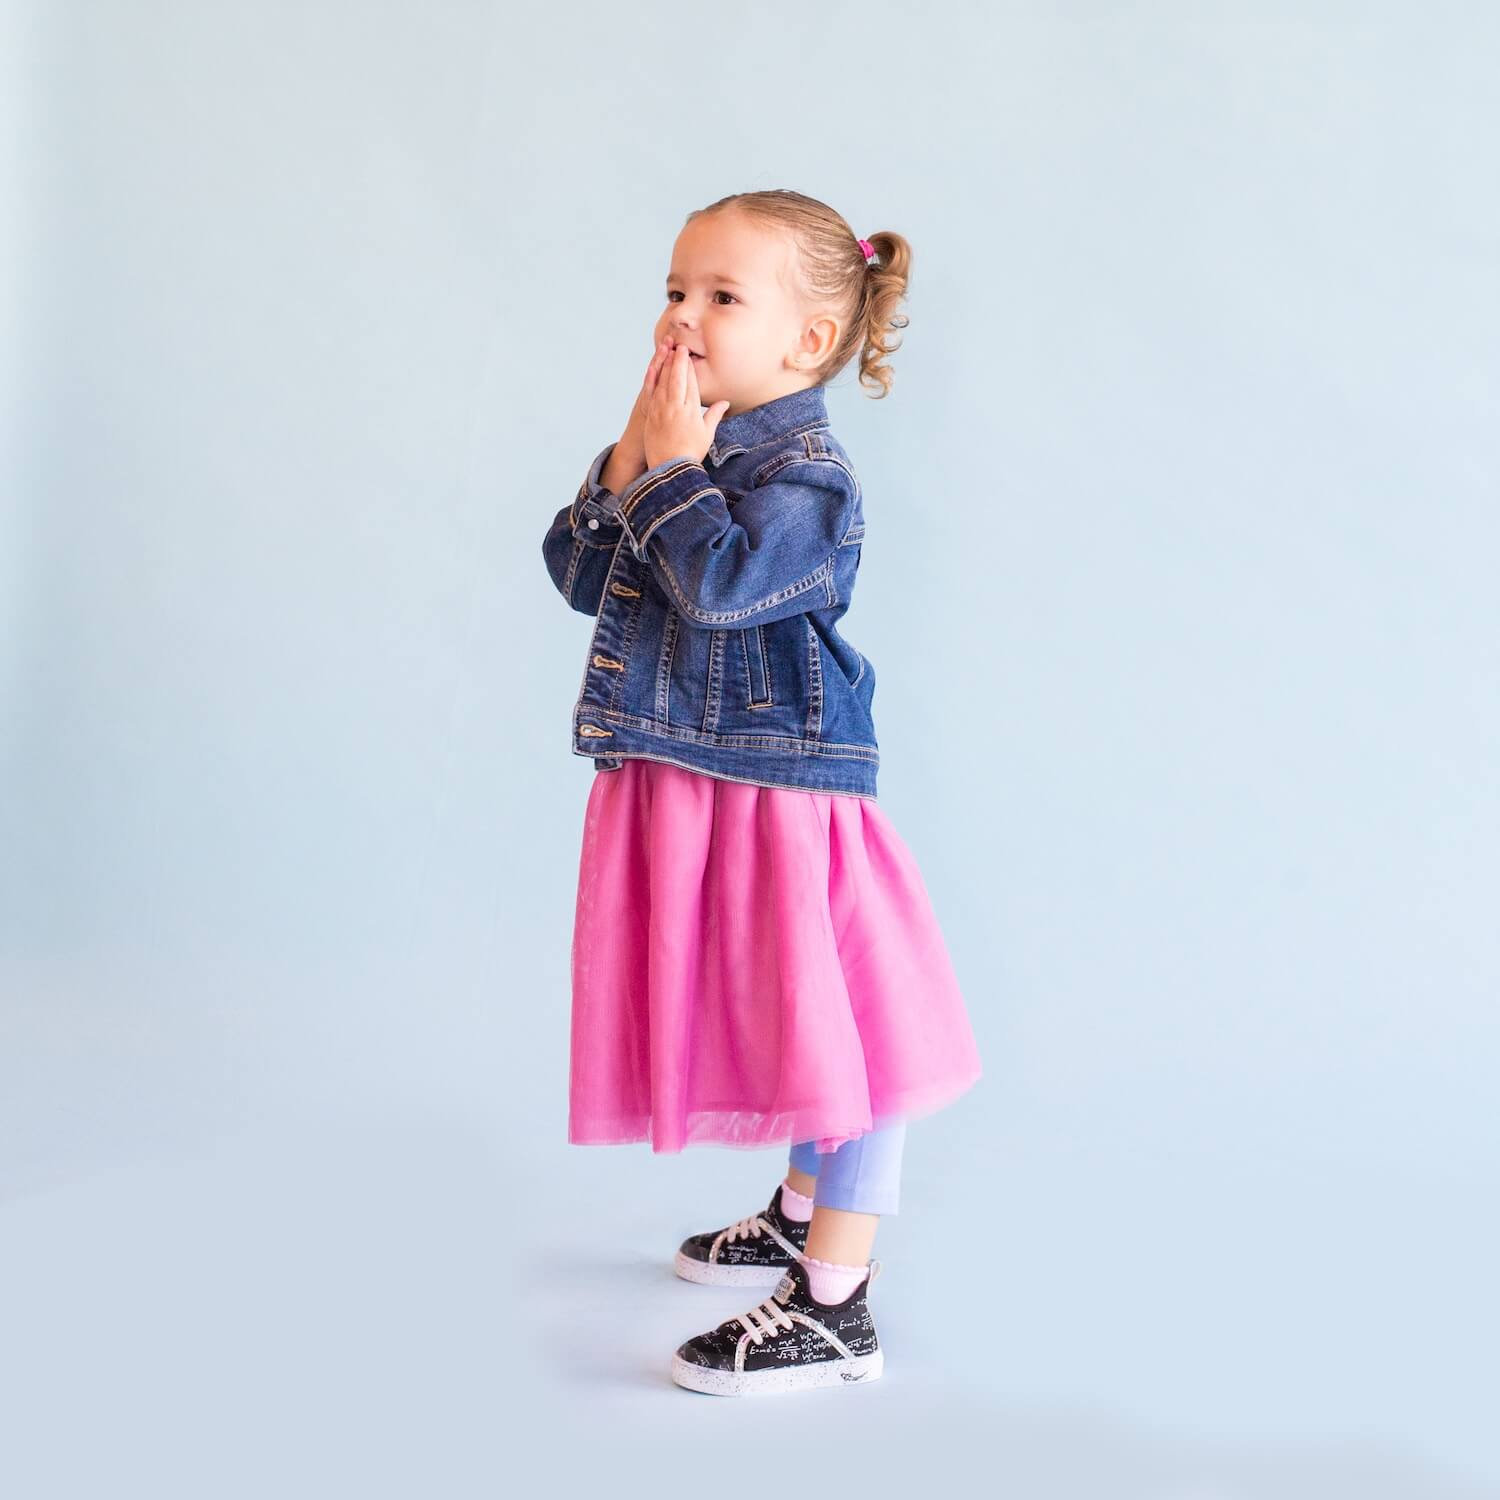 Shoes for girls - Toddler girl wearing Kazoom math toddler shoes